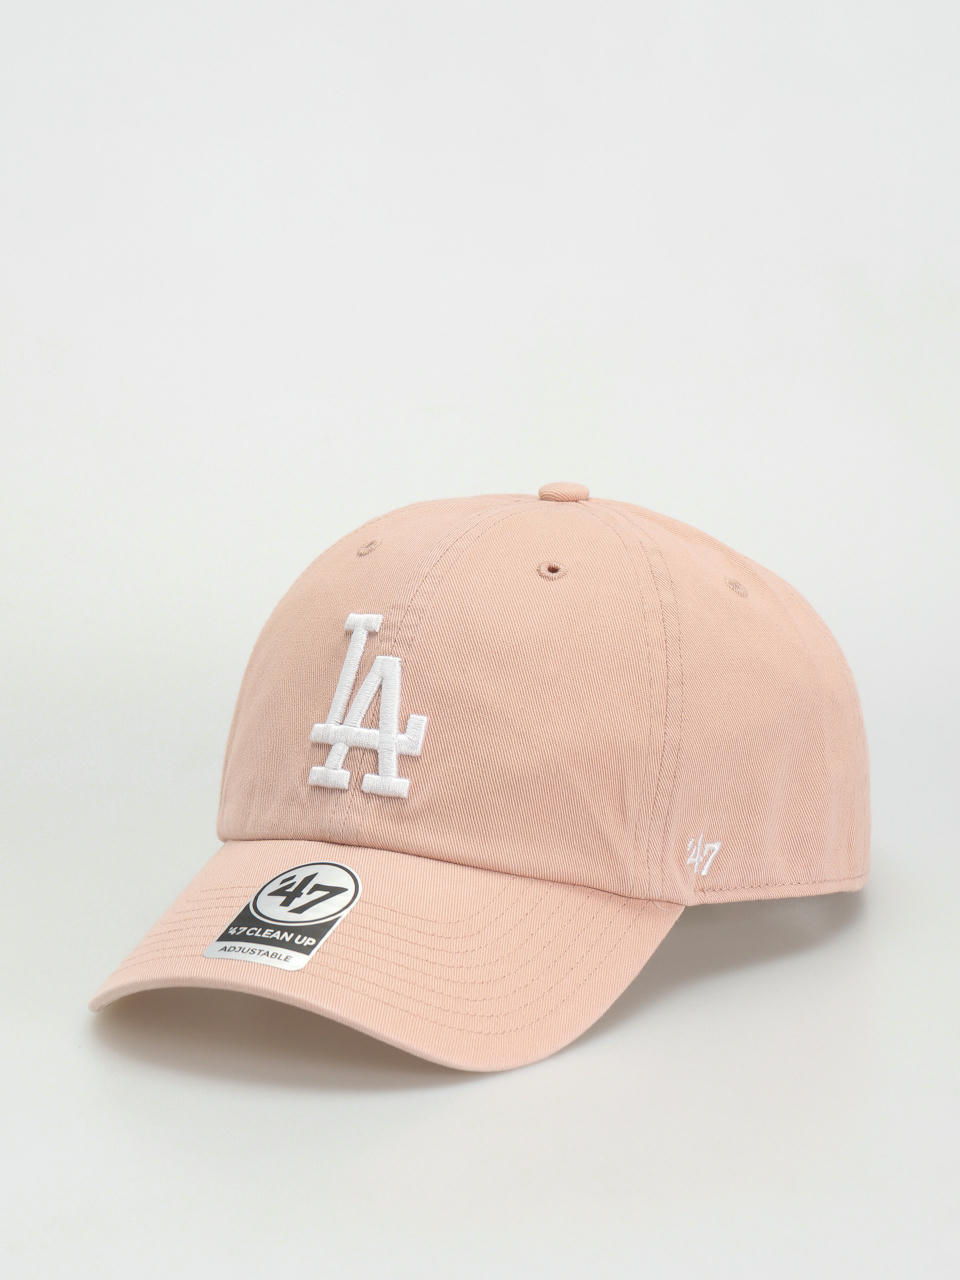 Official Los Angeles Dodgers Baseball Hats, Dodgers Caps, Dodgers Hat,  Beanies